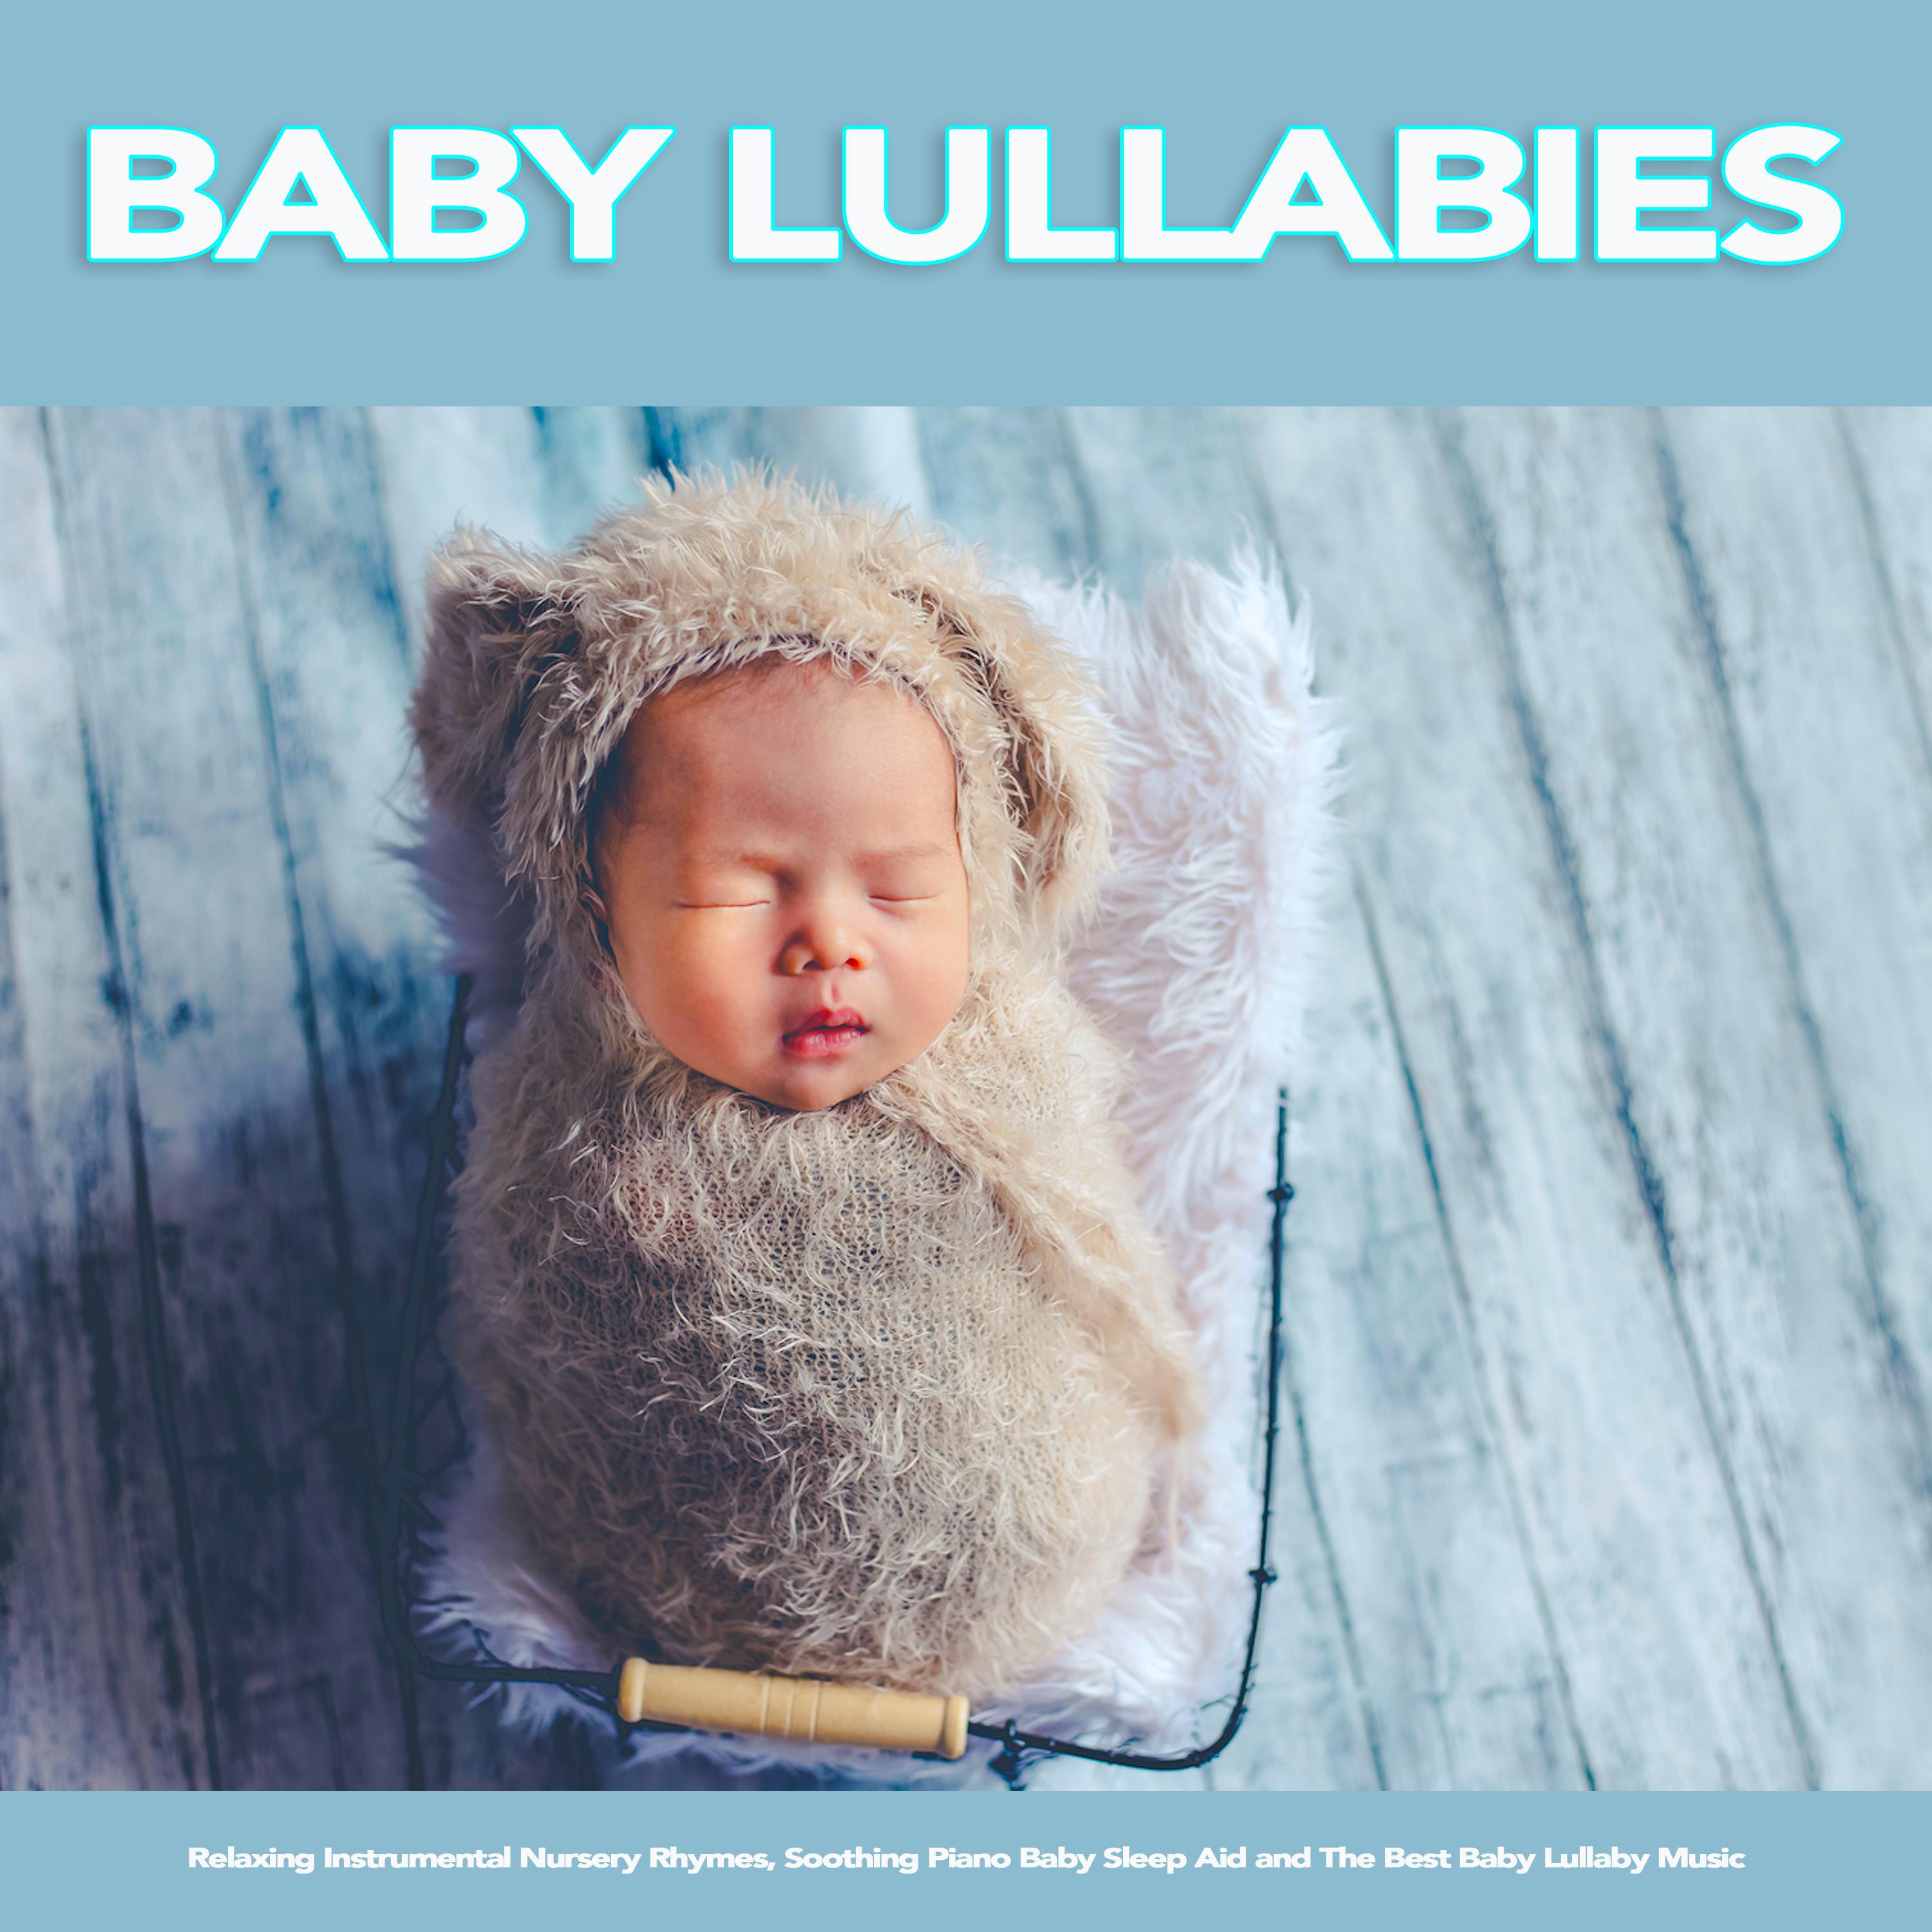 Mary Had A Little Lamb - Baby Lullabies and Nursery Rhymes For Baby Sleep